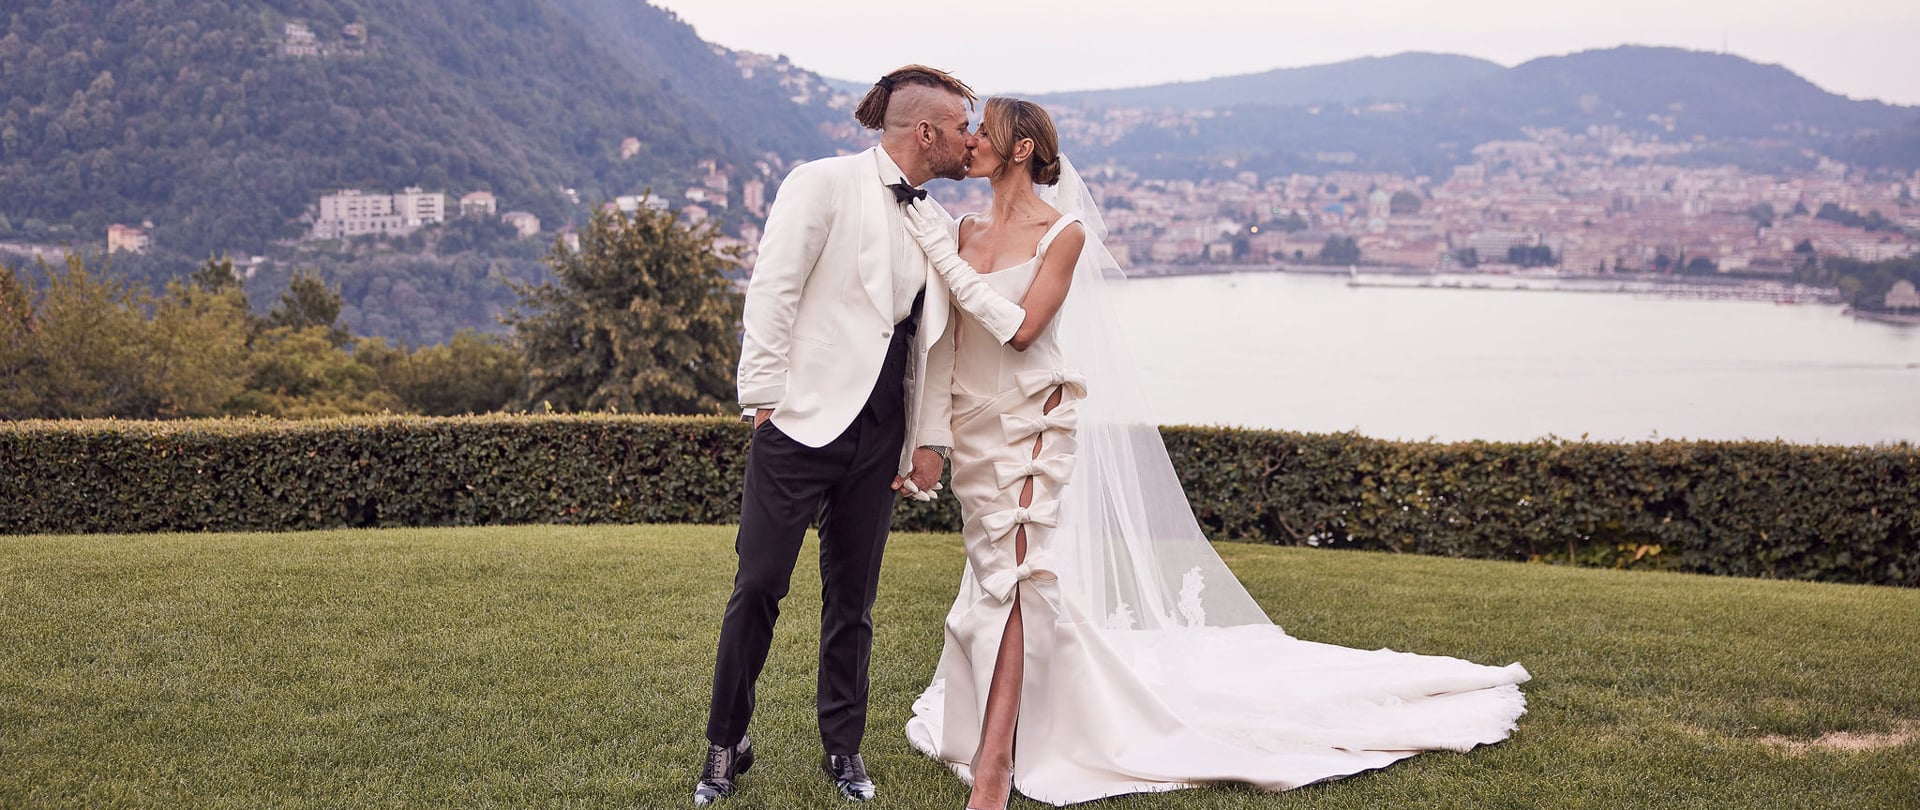 Maria & Josh Wedding Video Filmed atLake Como,Italy